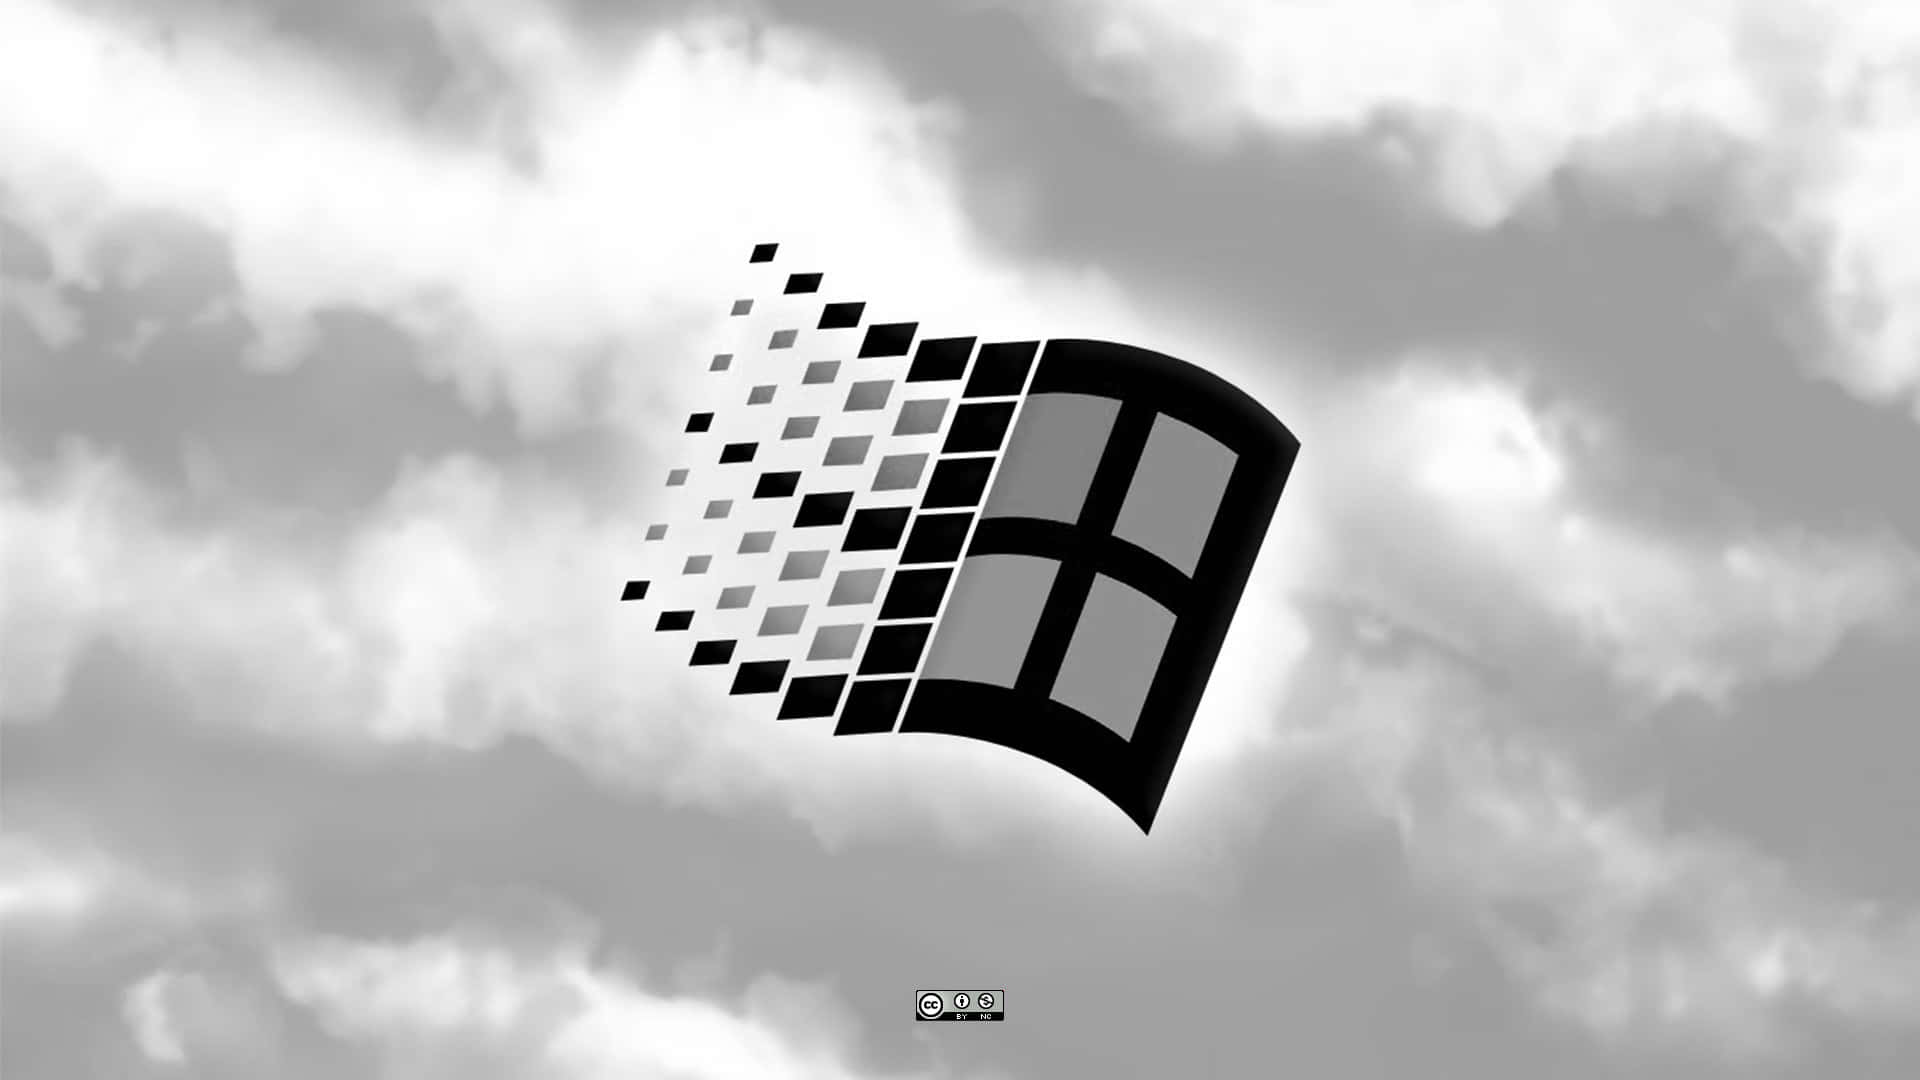 Windows logo, Windows logo, Windows logo, Windows logo, Windows logo, Windows logo, Windows logo, Windows logo, Windows logo, Windows logo, Windows logo, Windows logo Wallpaper